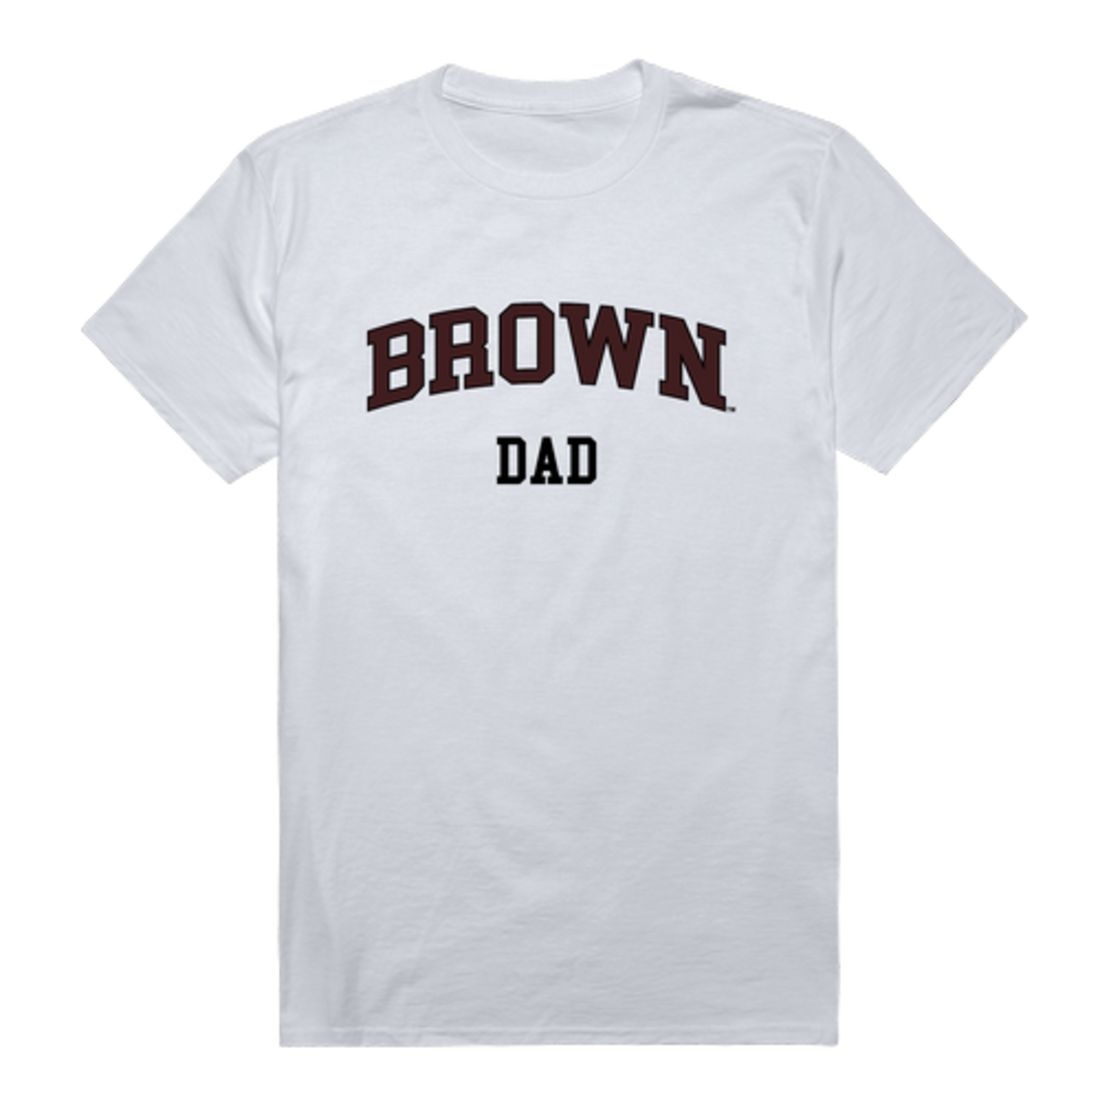 Brown University Bears Dad T-Shirt